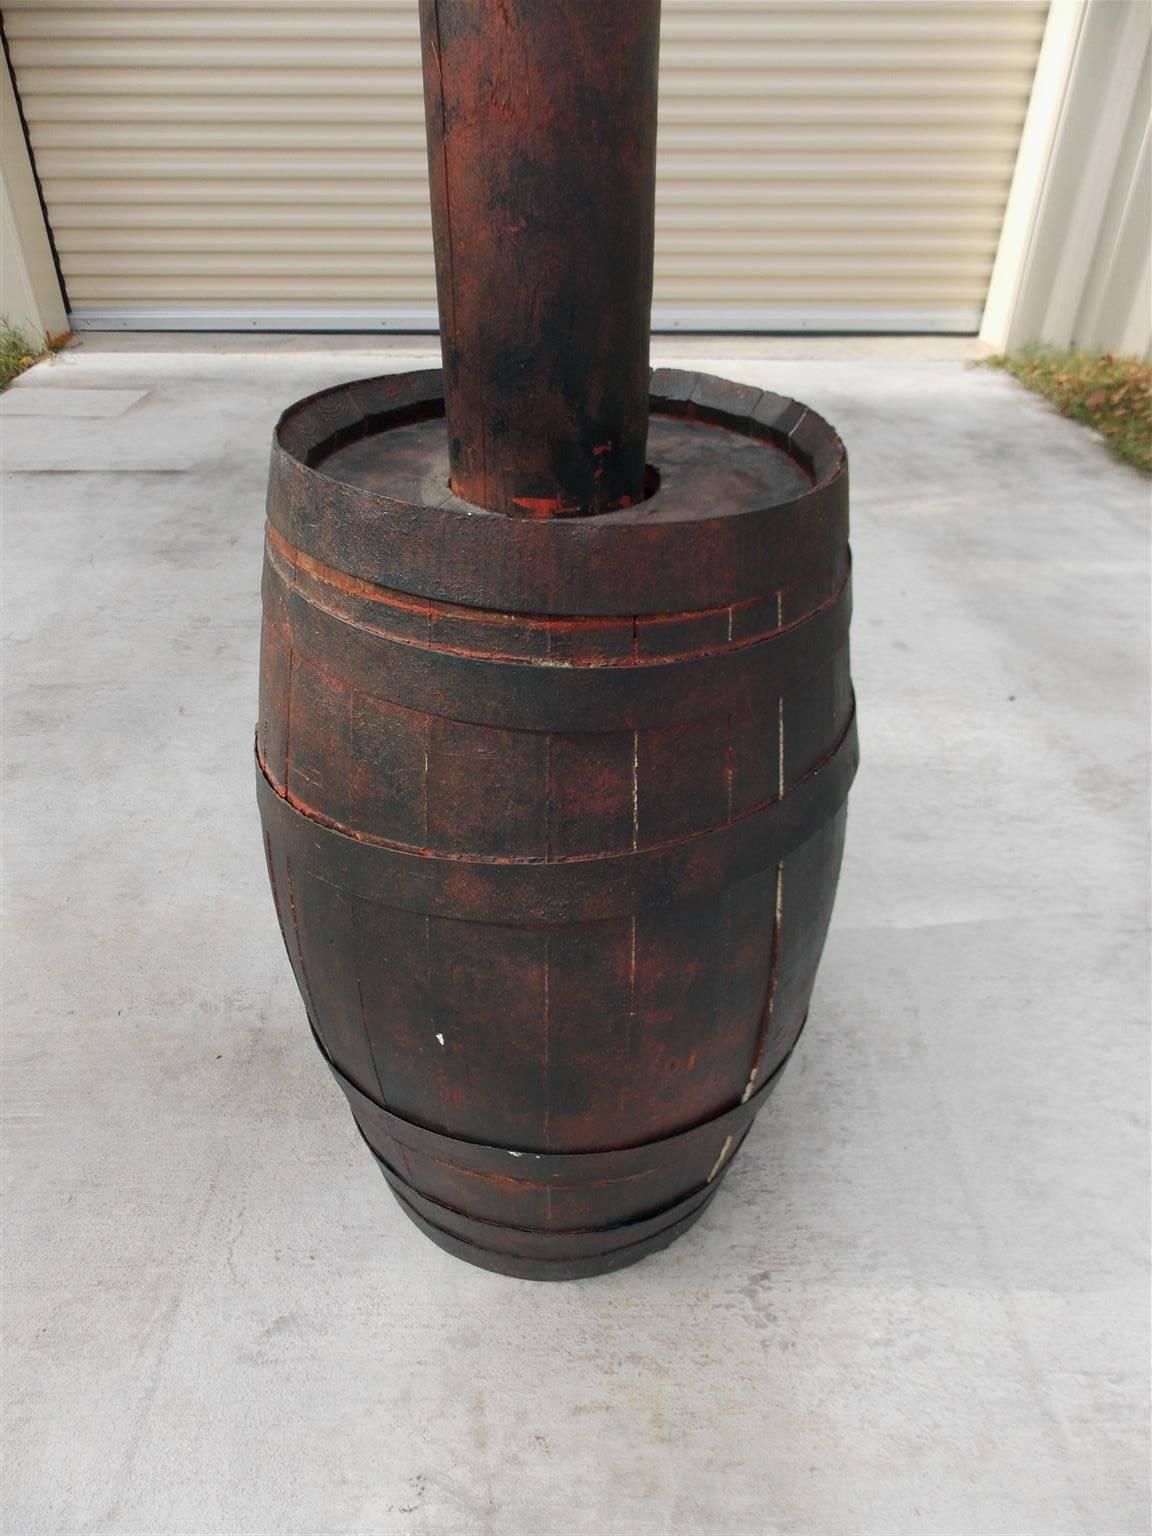 Early 19th Century American Copper Street Lantern in Wooden Barrel, Sturbridge, MA., Circa 1820 For Sale